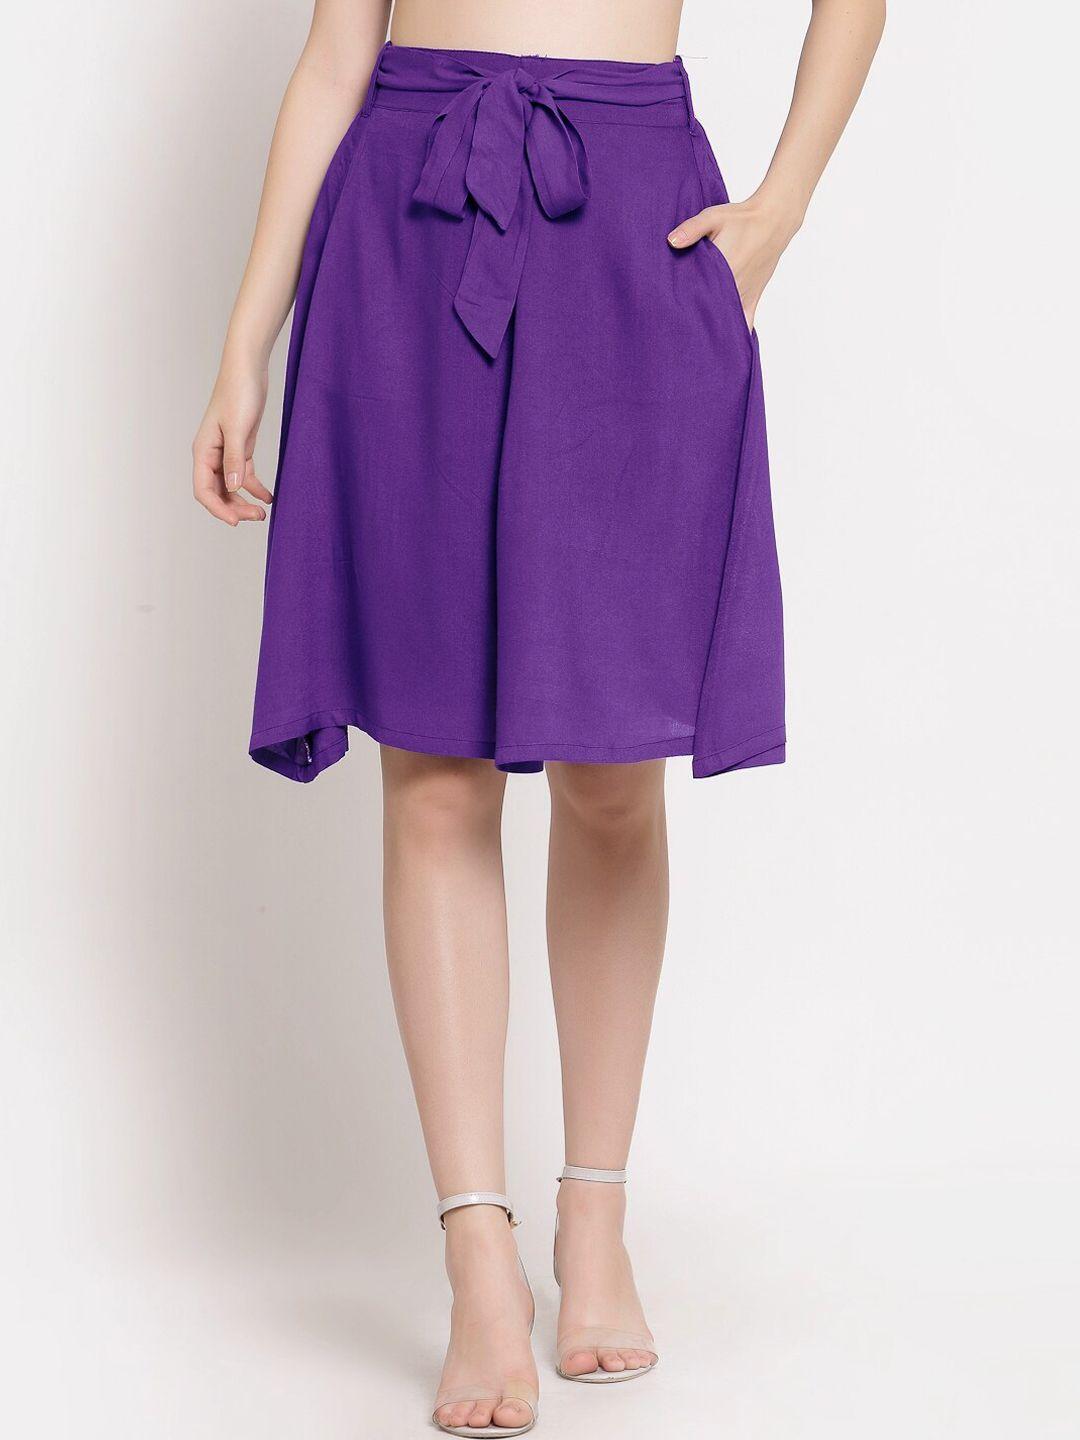 patrorna women purple solid a-line skirt